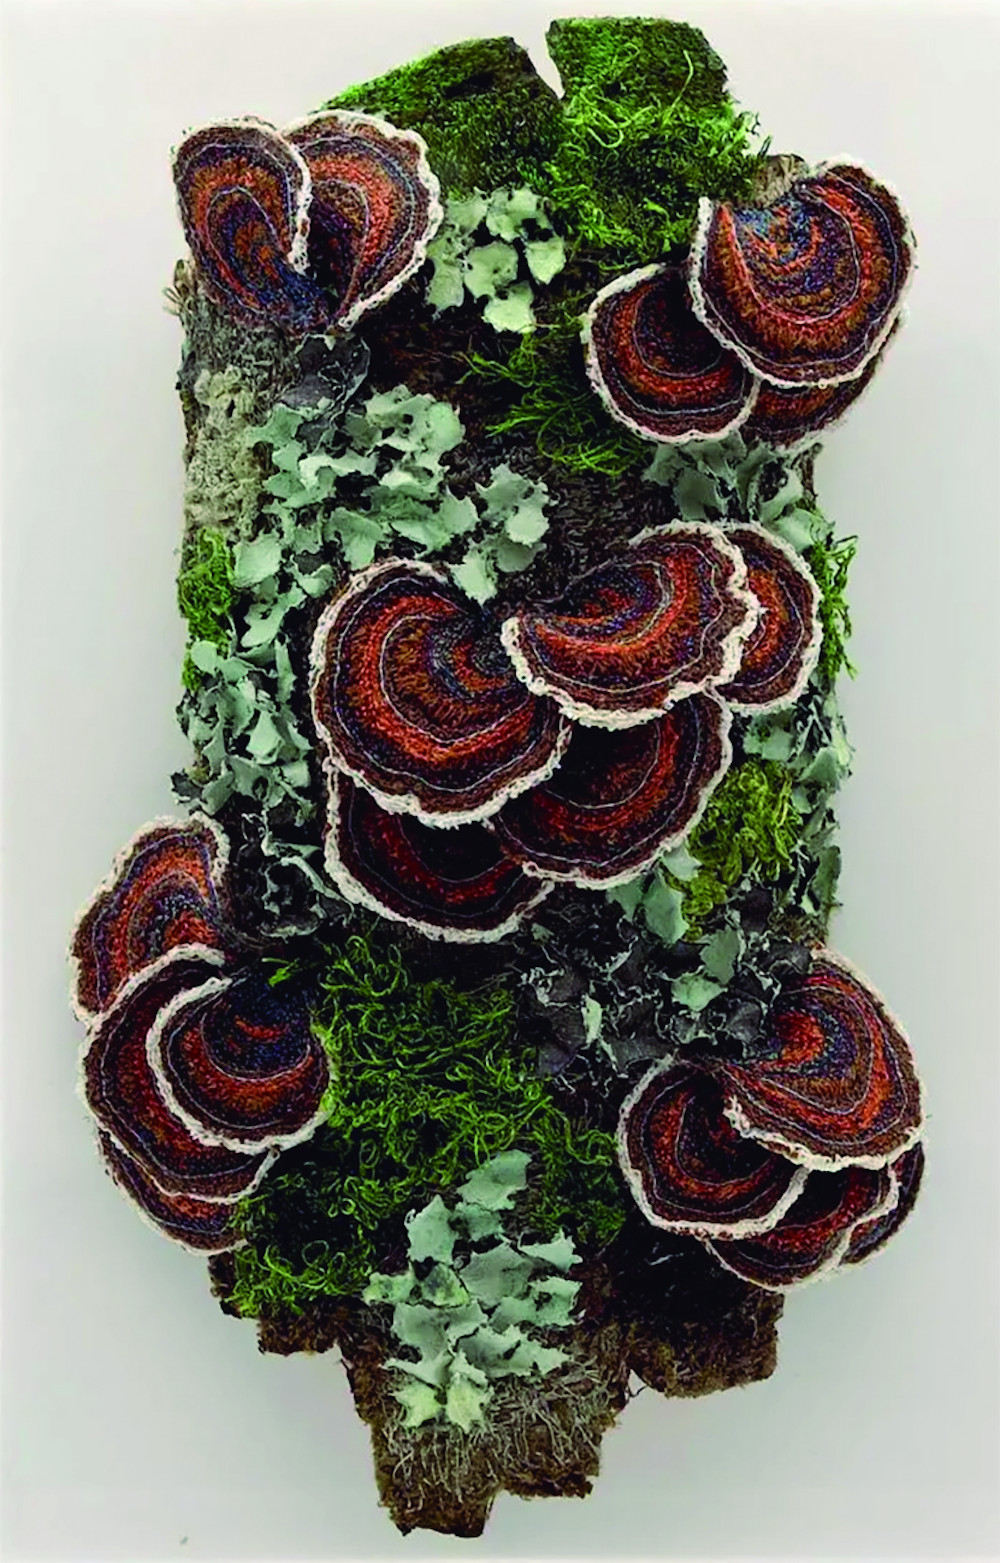 ©Amanda Cobbett, *Lichen and fungi*, 2020. Cortesía de la artista